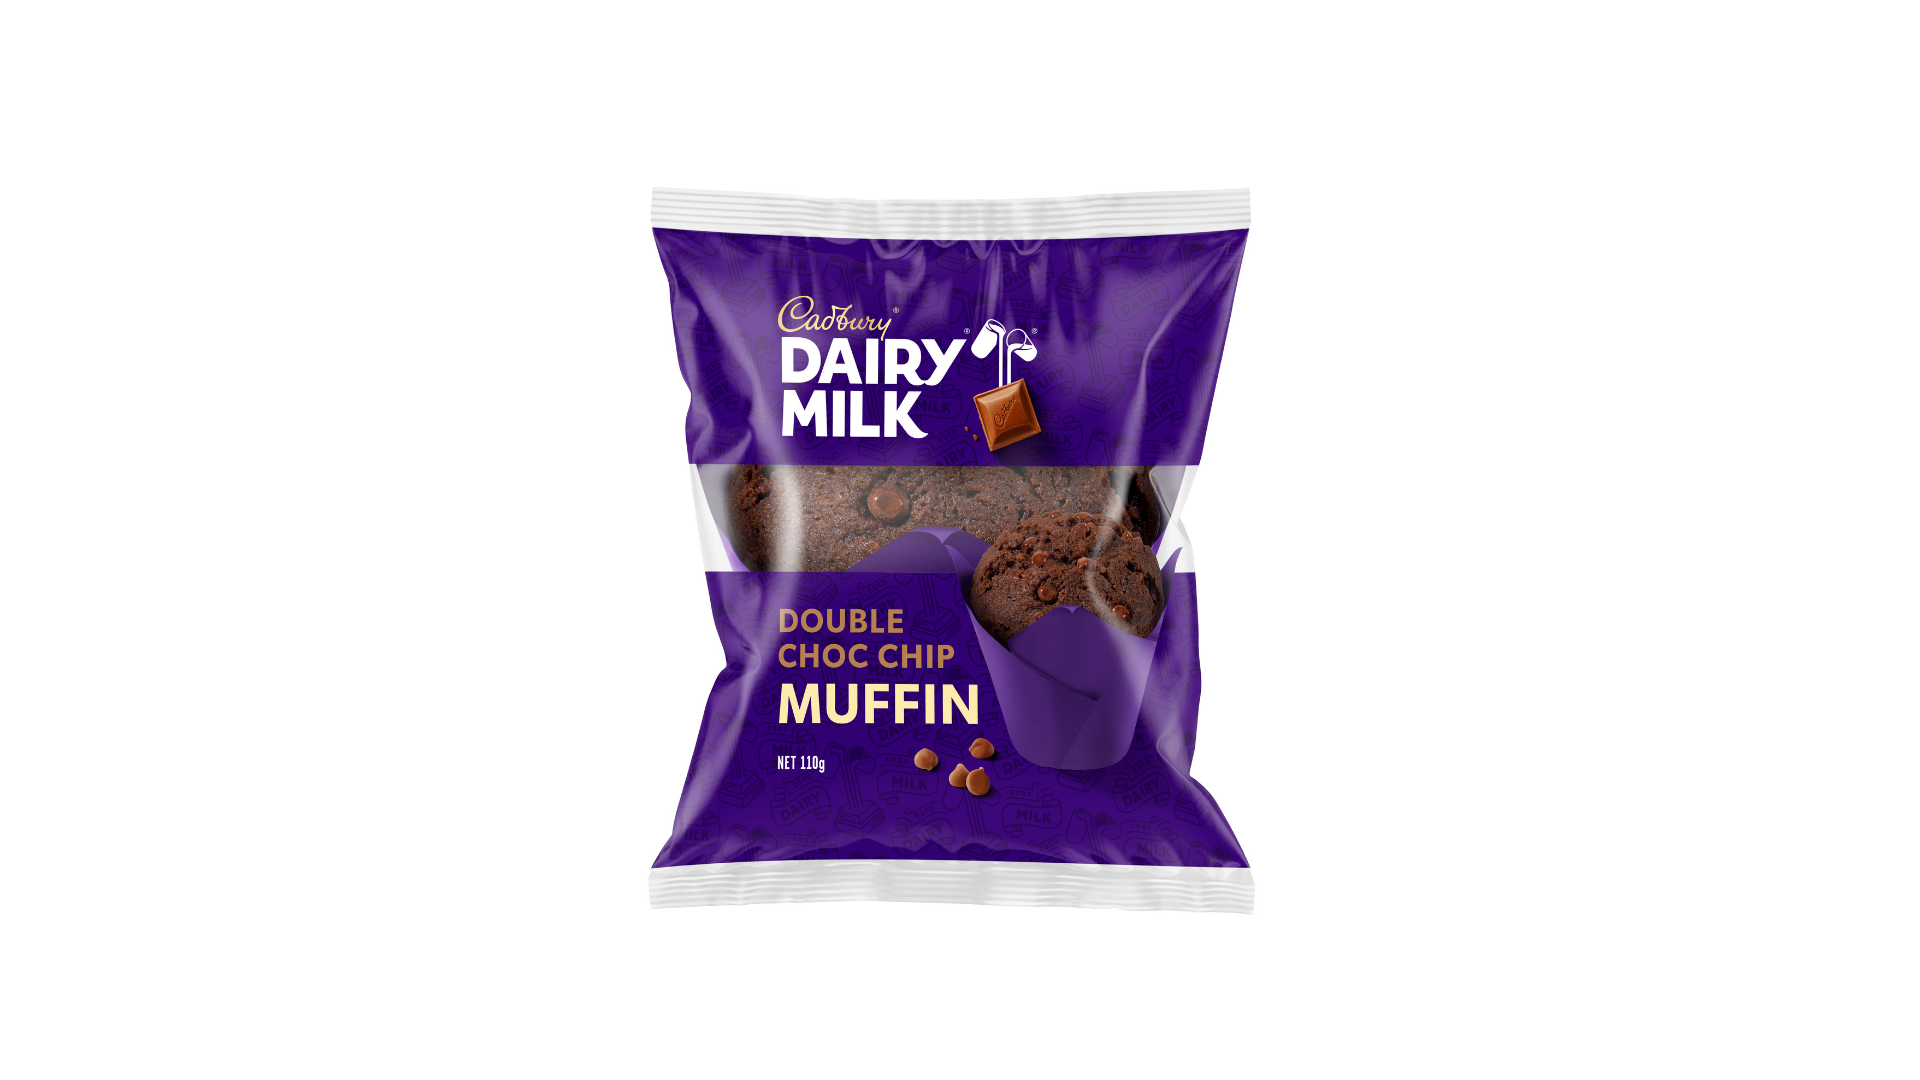 Cadbury Dairy Milk Muffin single serve pack.png